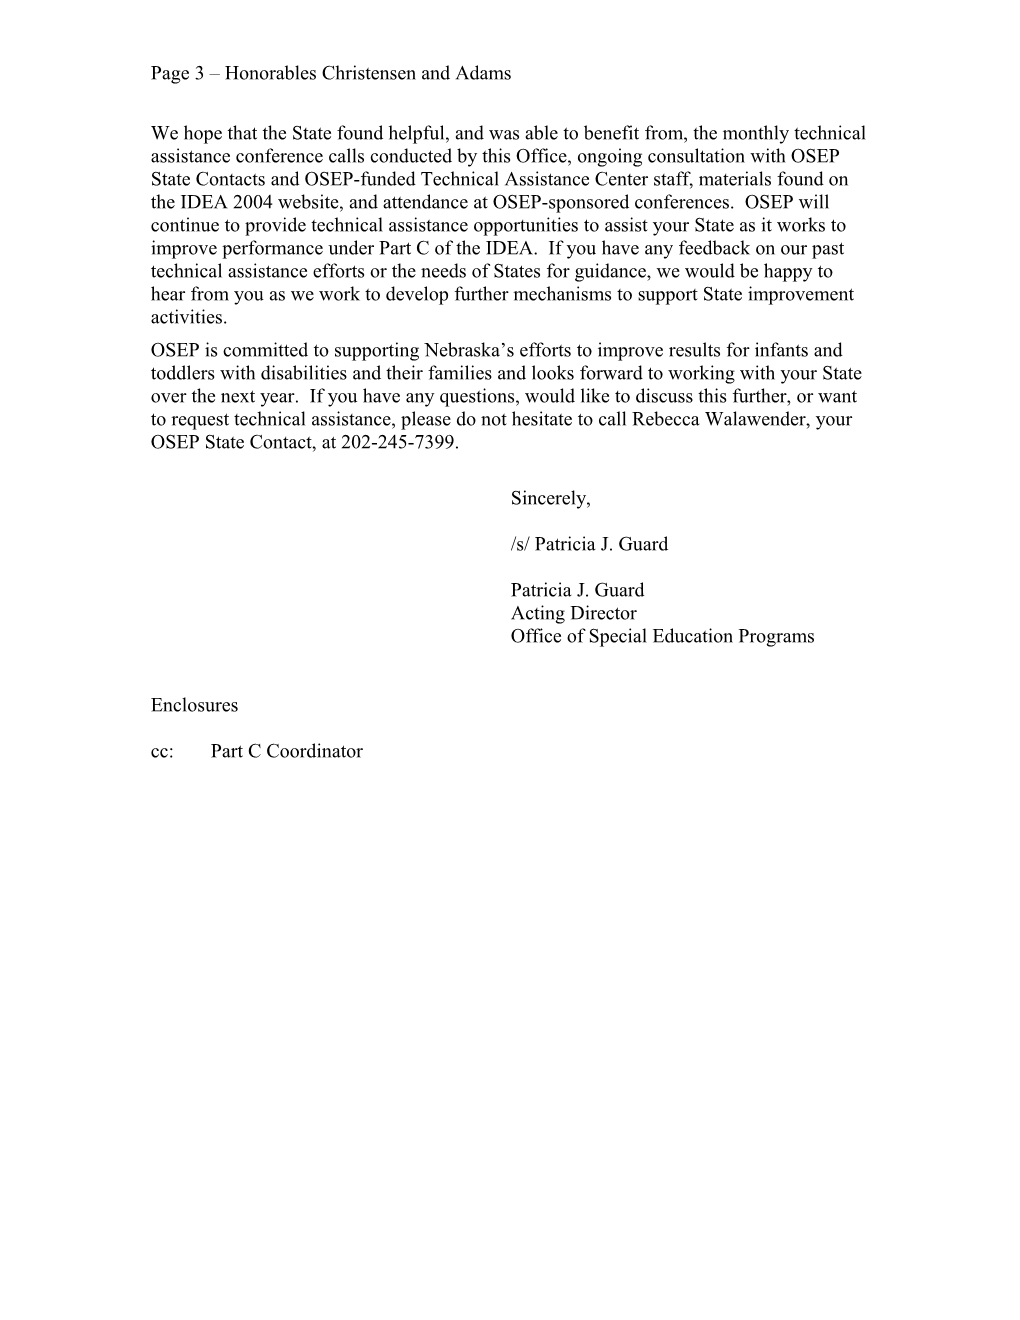 IDEA 2007 Part C Nebraska Annual Performance Report OSEP Response (MS WORD)